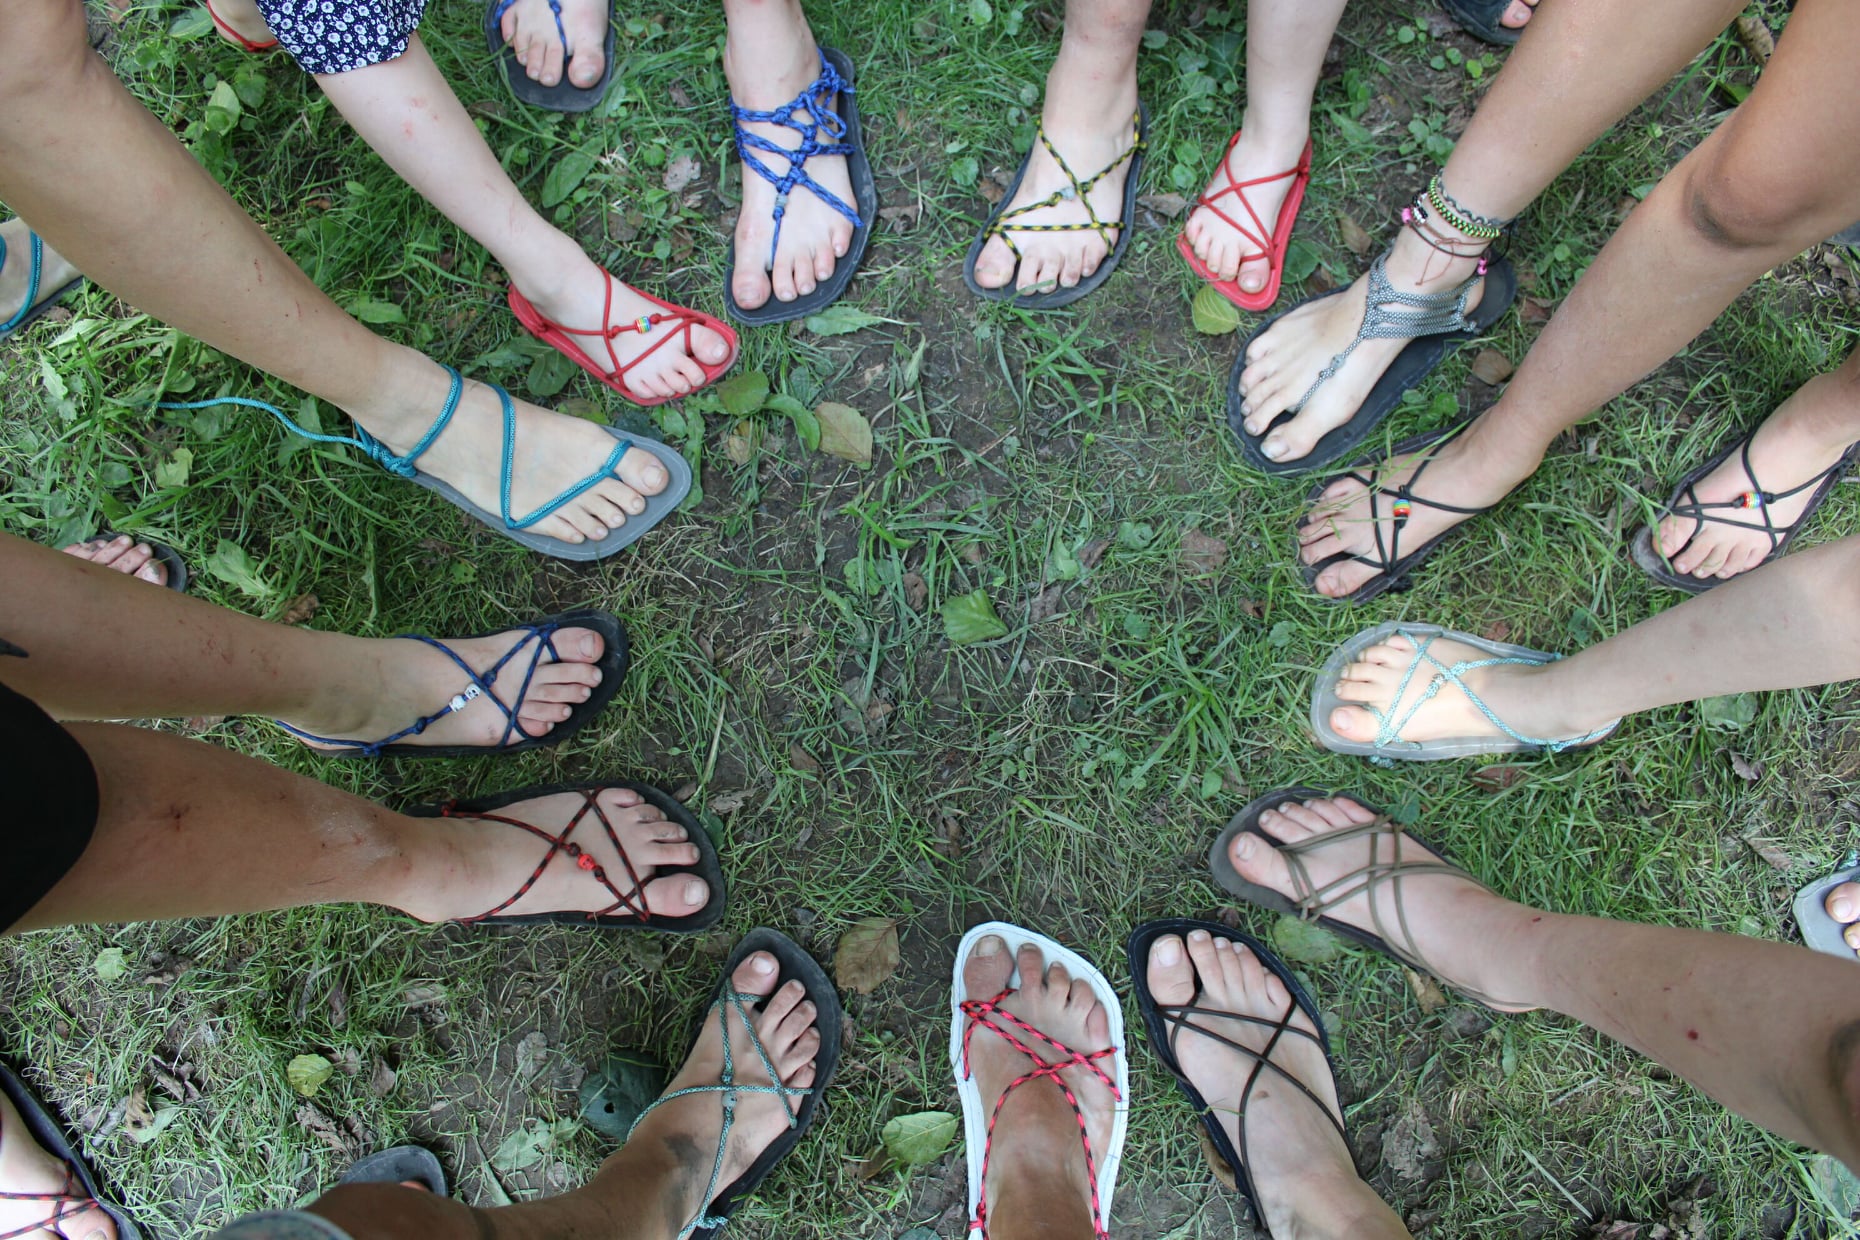 Barefoot sandály